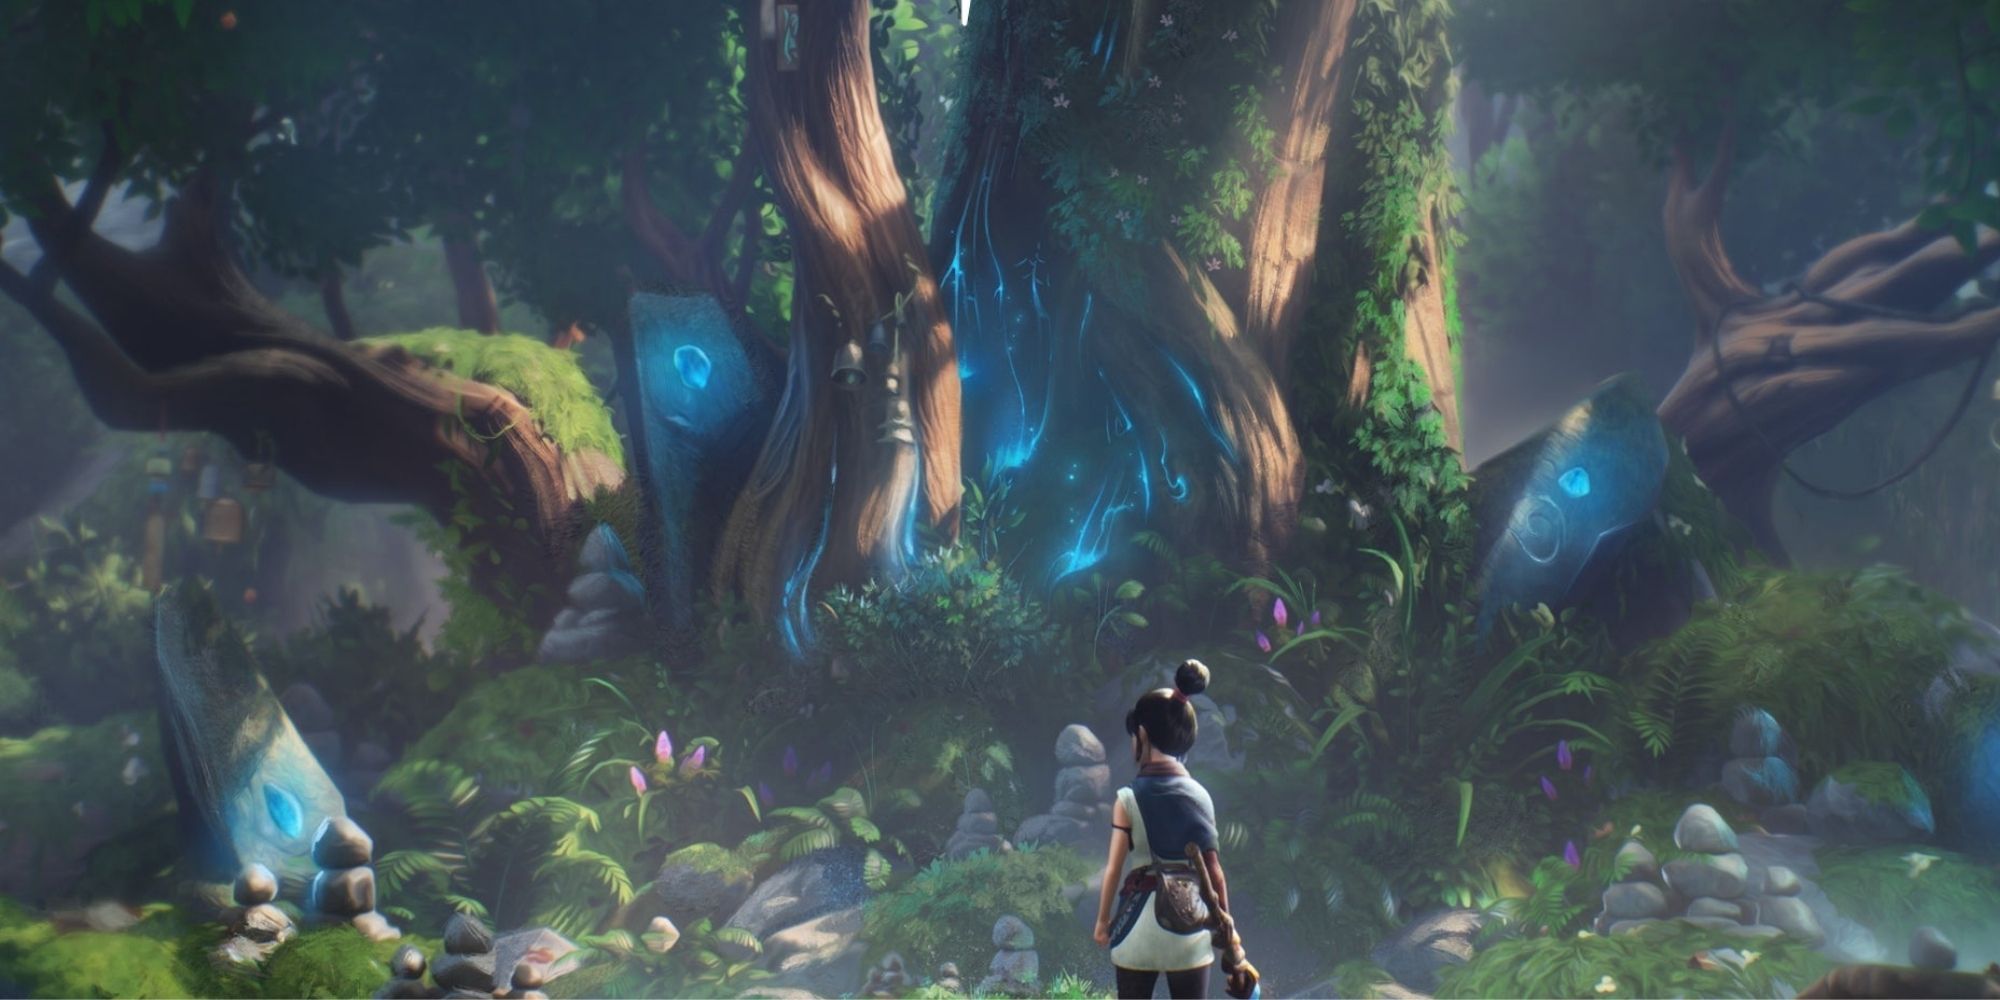 Promotional image of Kena: Bridge of Spirits.